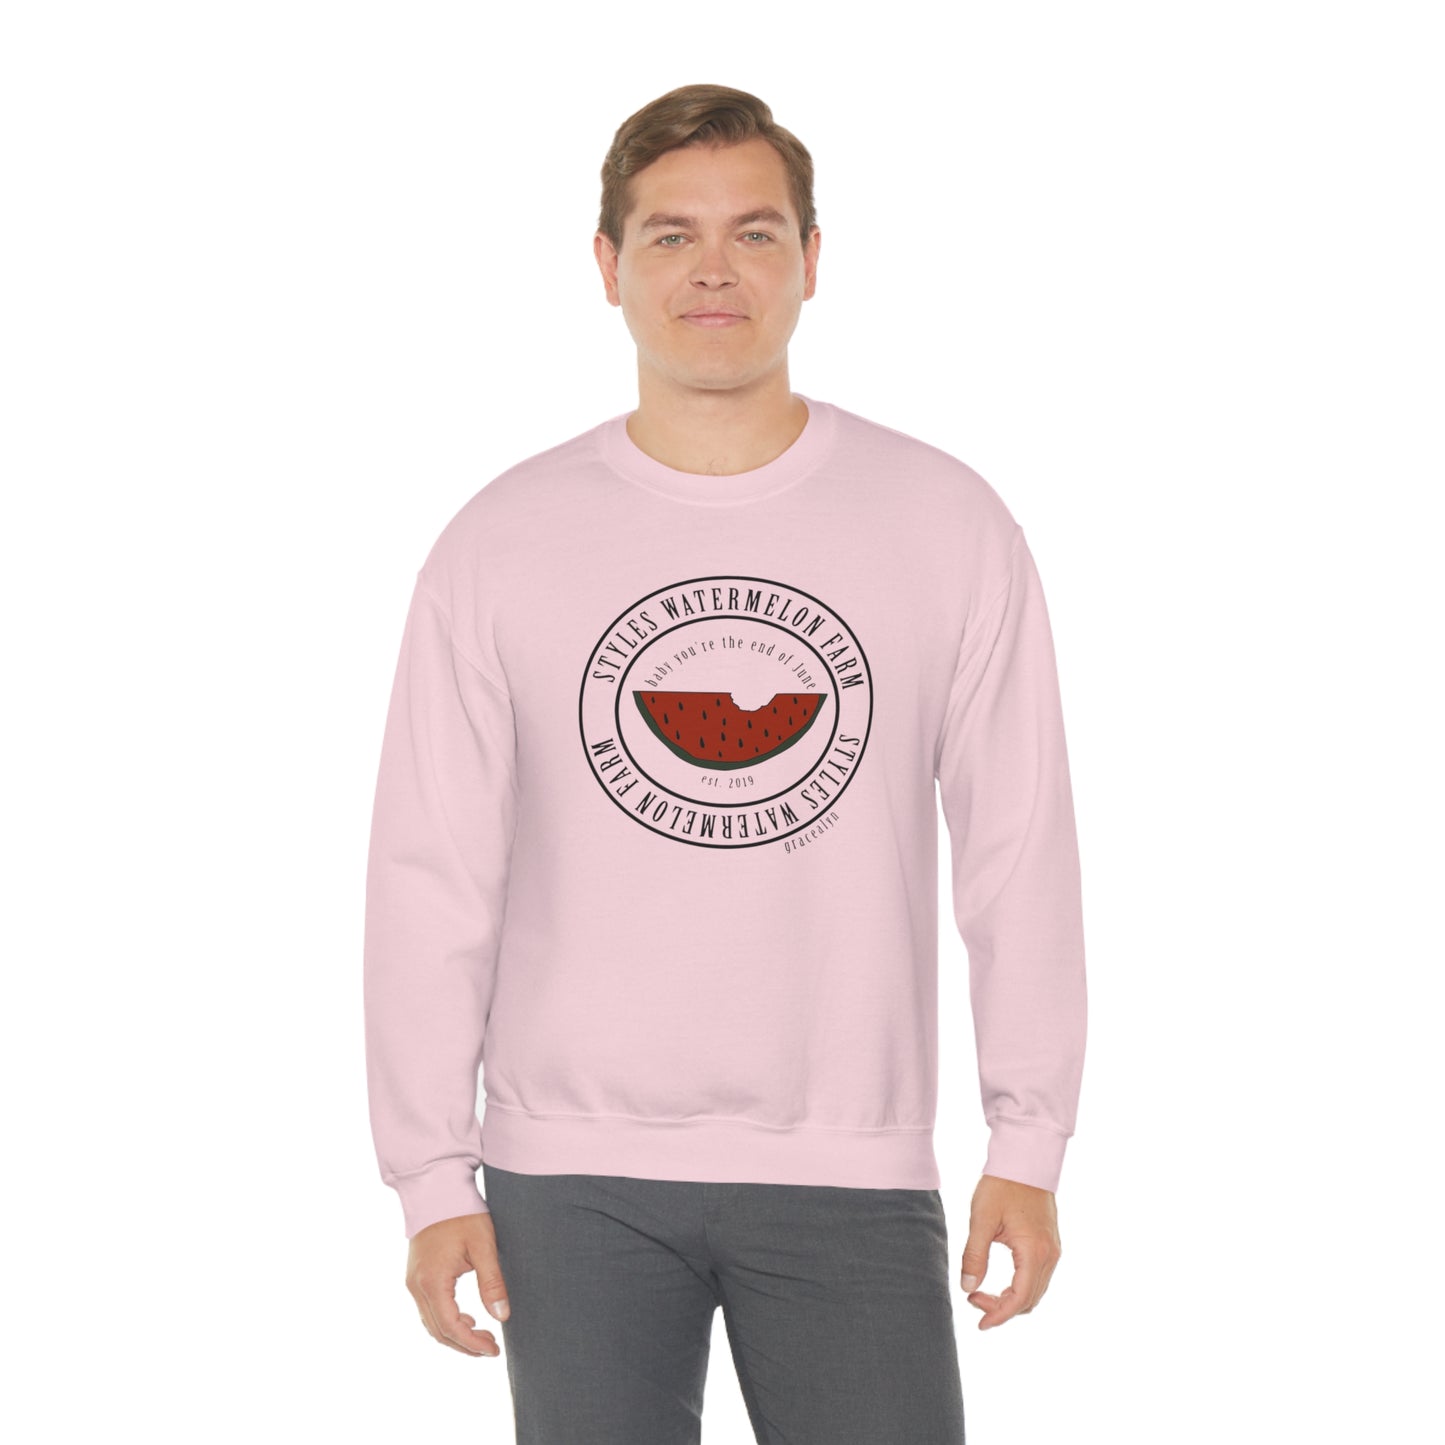 Styles Watermelon Farm Crewneck Sweatshirt